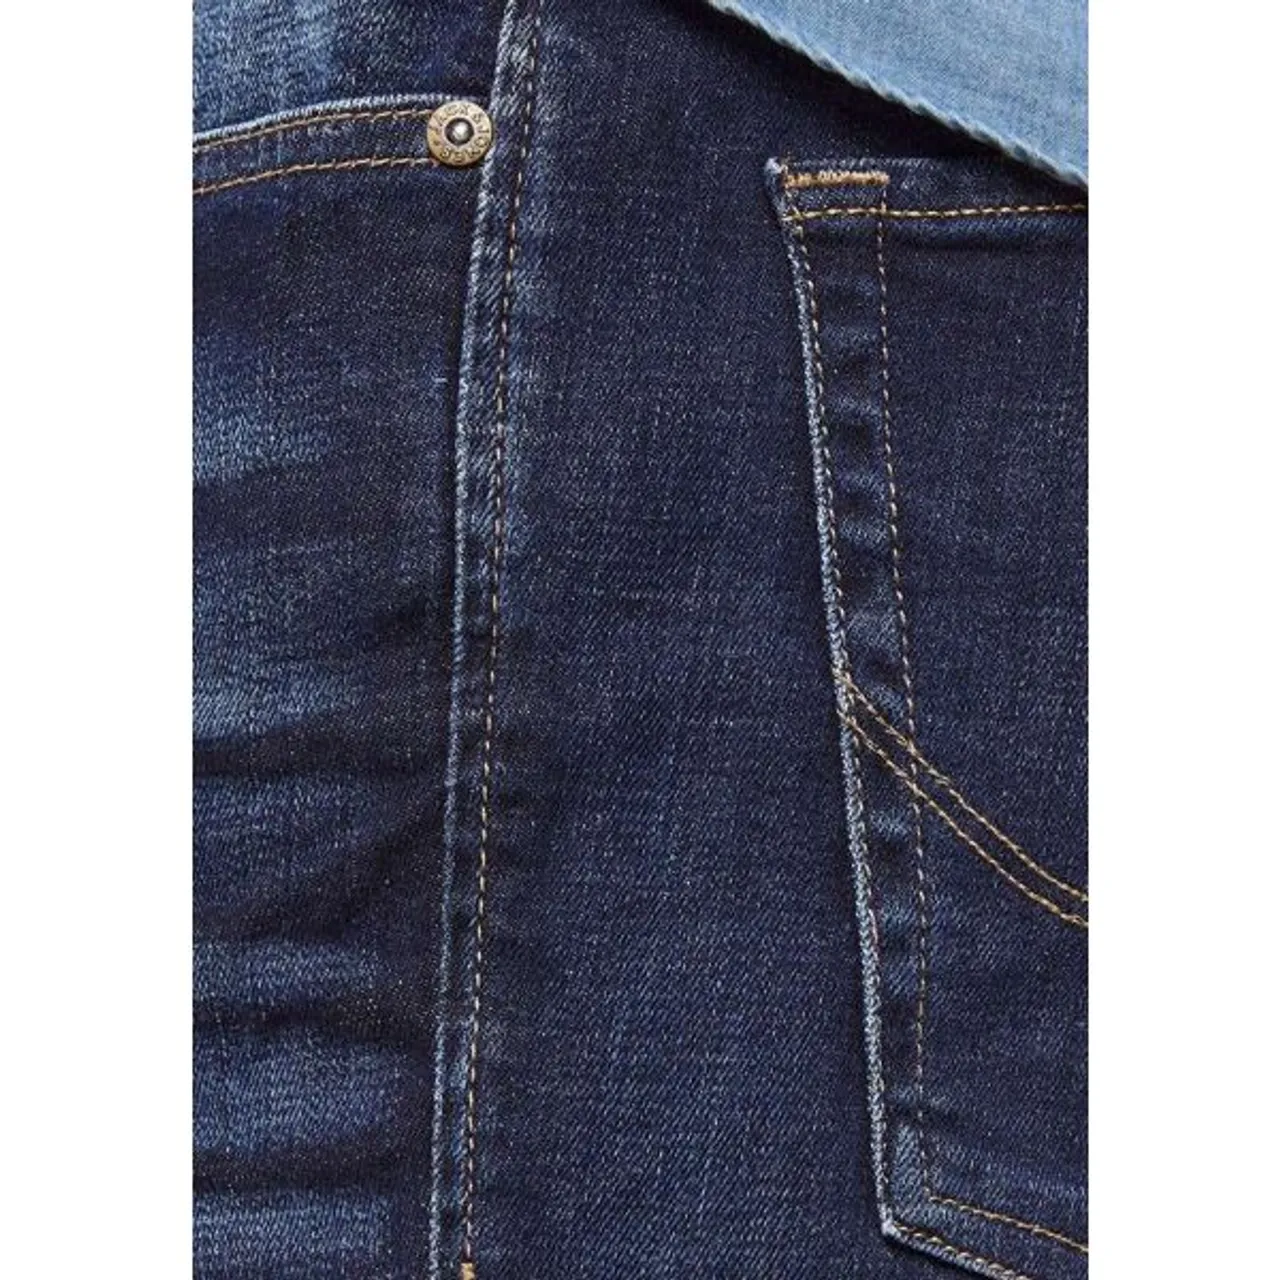 Regular-fit-Jeans JACK & JONES "CLARK JJORIGINAL" Gr. 34, Länge 36, blau (denim, blue) Herren Jeans Regular Fit